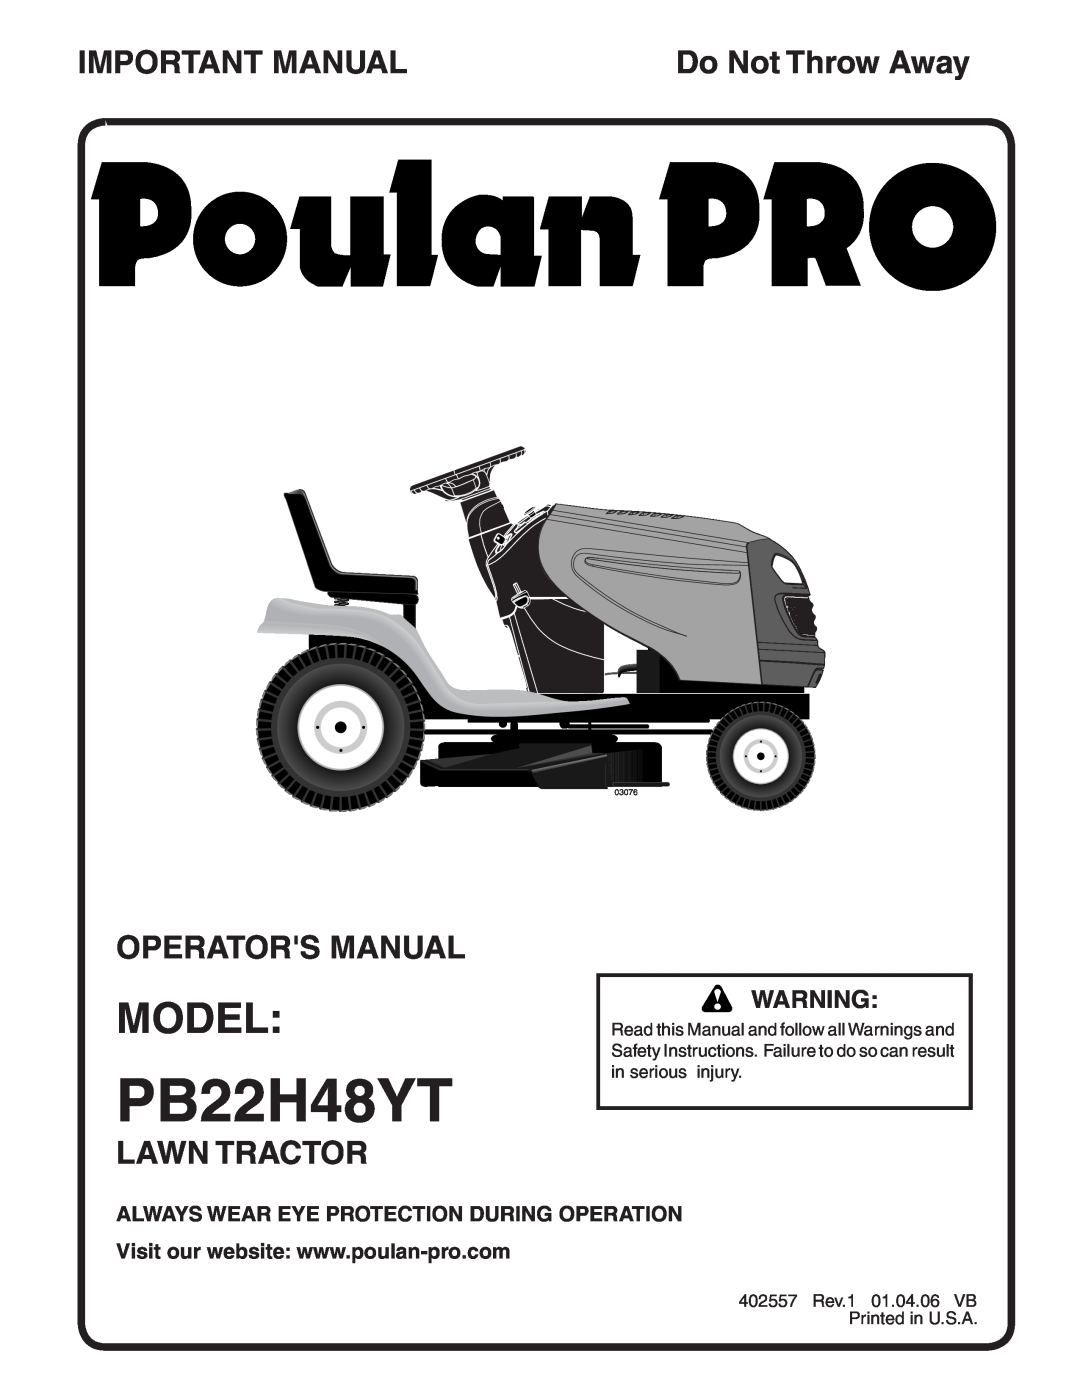 Poulan PB22H48YT manual Model, Important Manual, Operators Manual, Lawn Tractor, Do Not Throw Away, 03076 